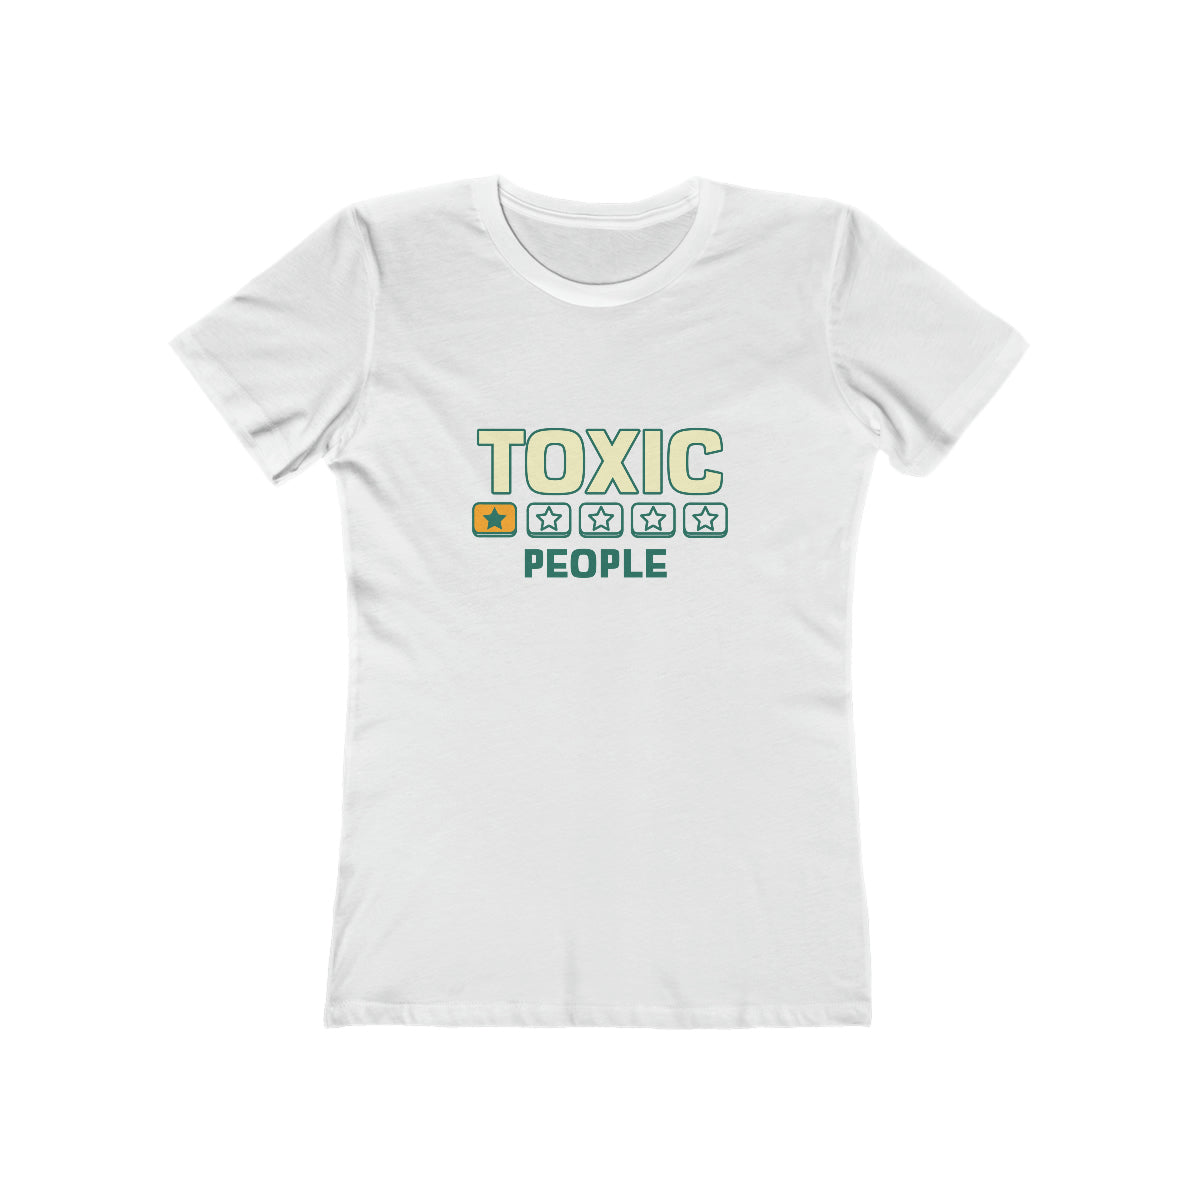 Toxic People - Women's T-shirt